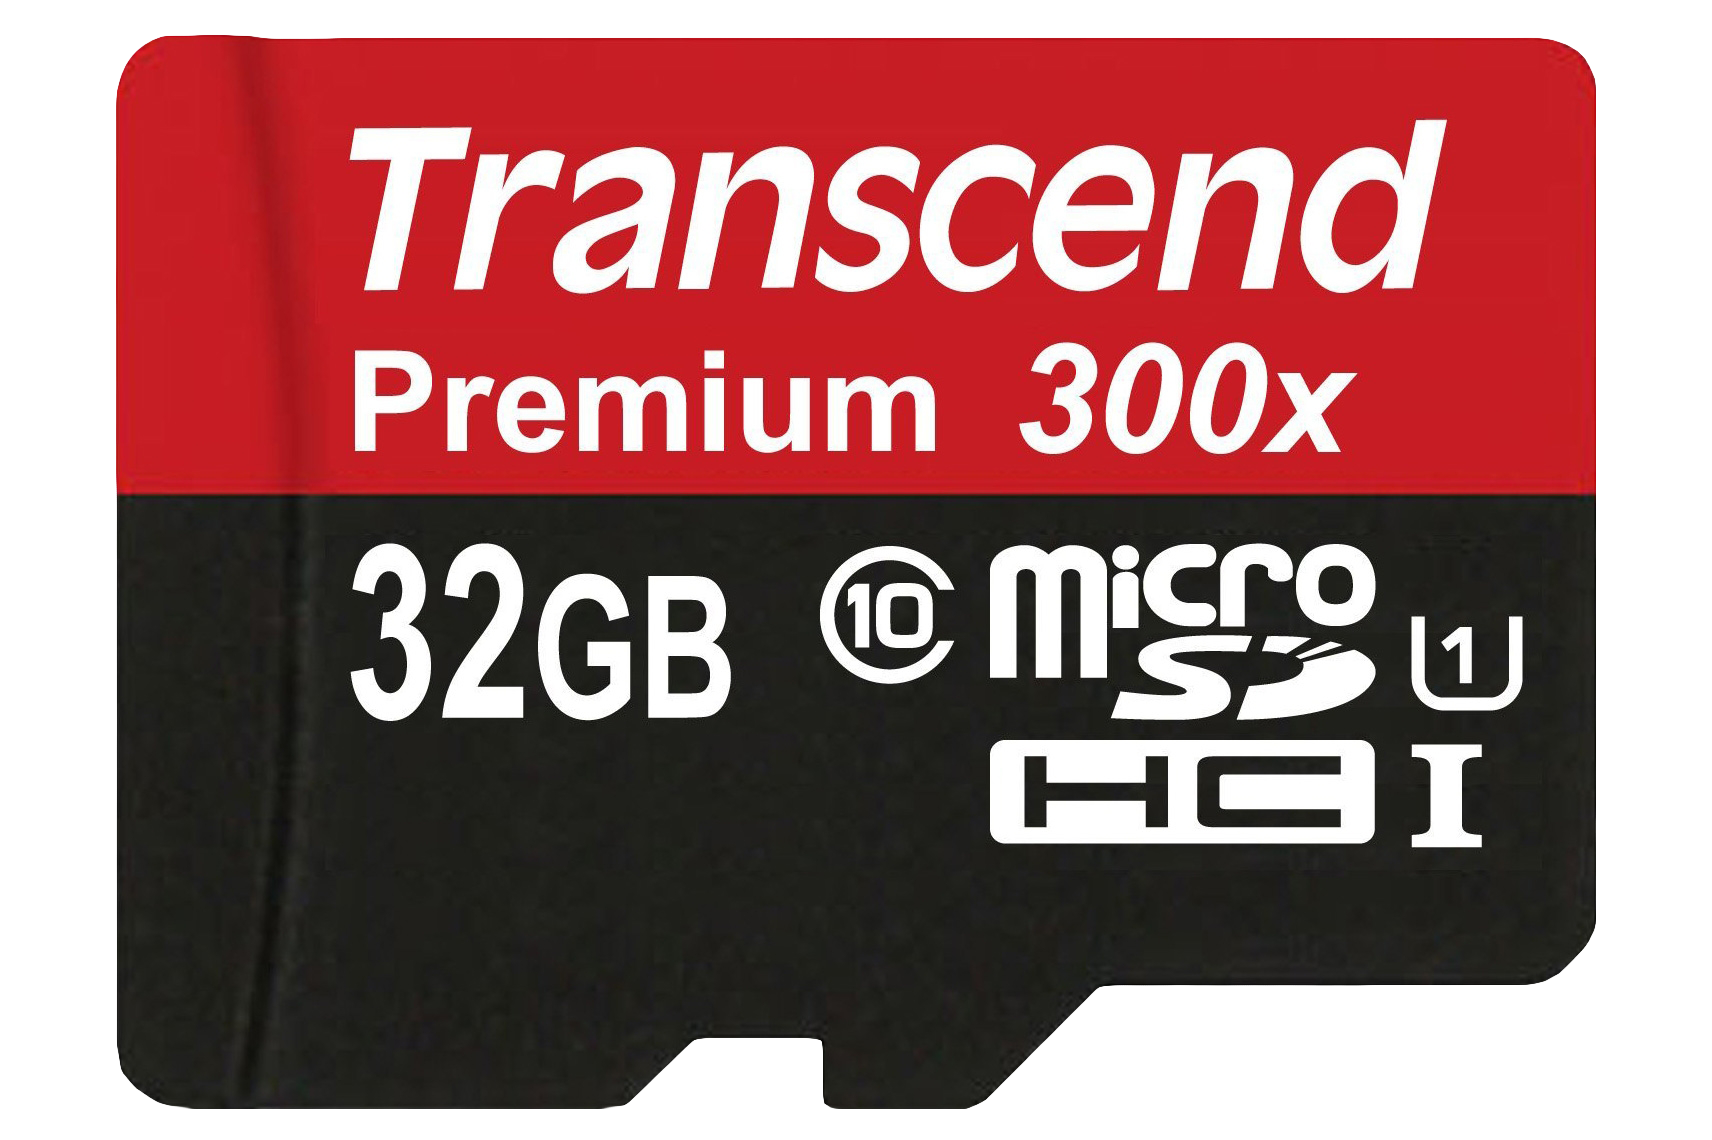 Transcend Memory Card PNG Image